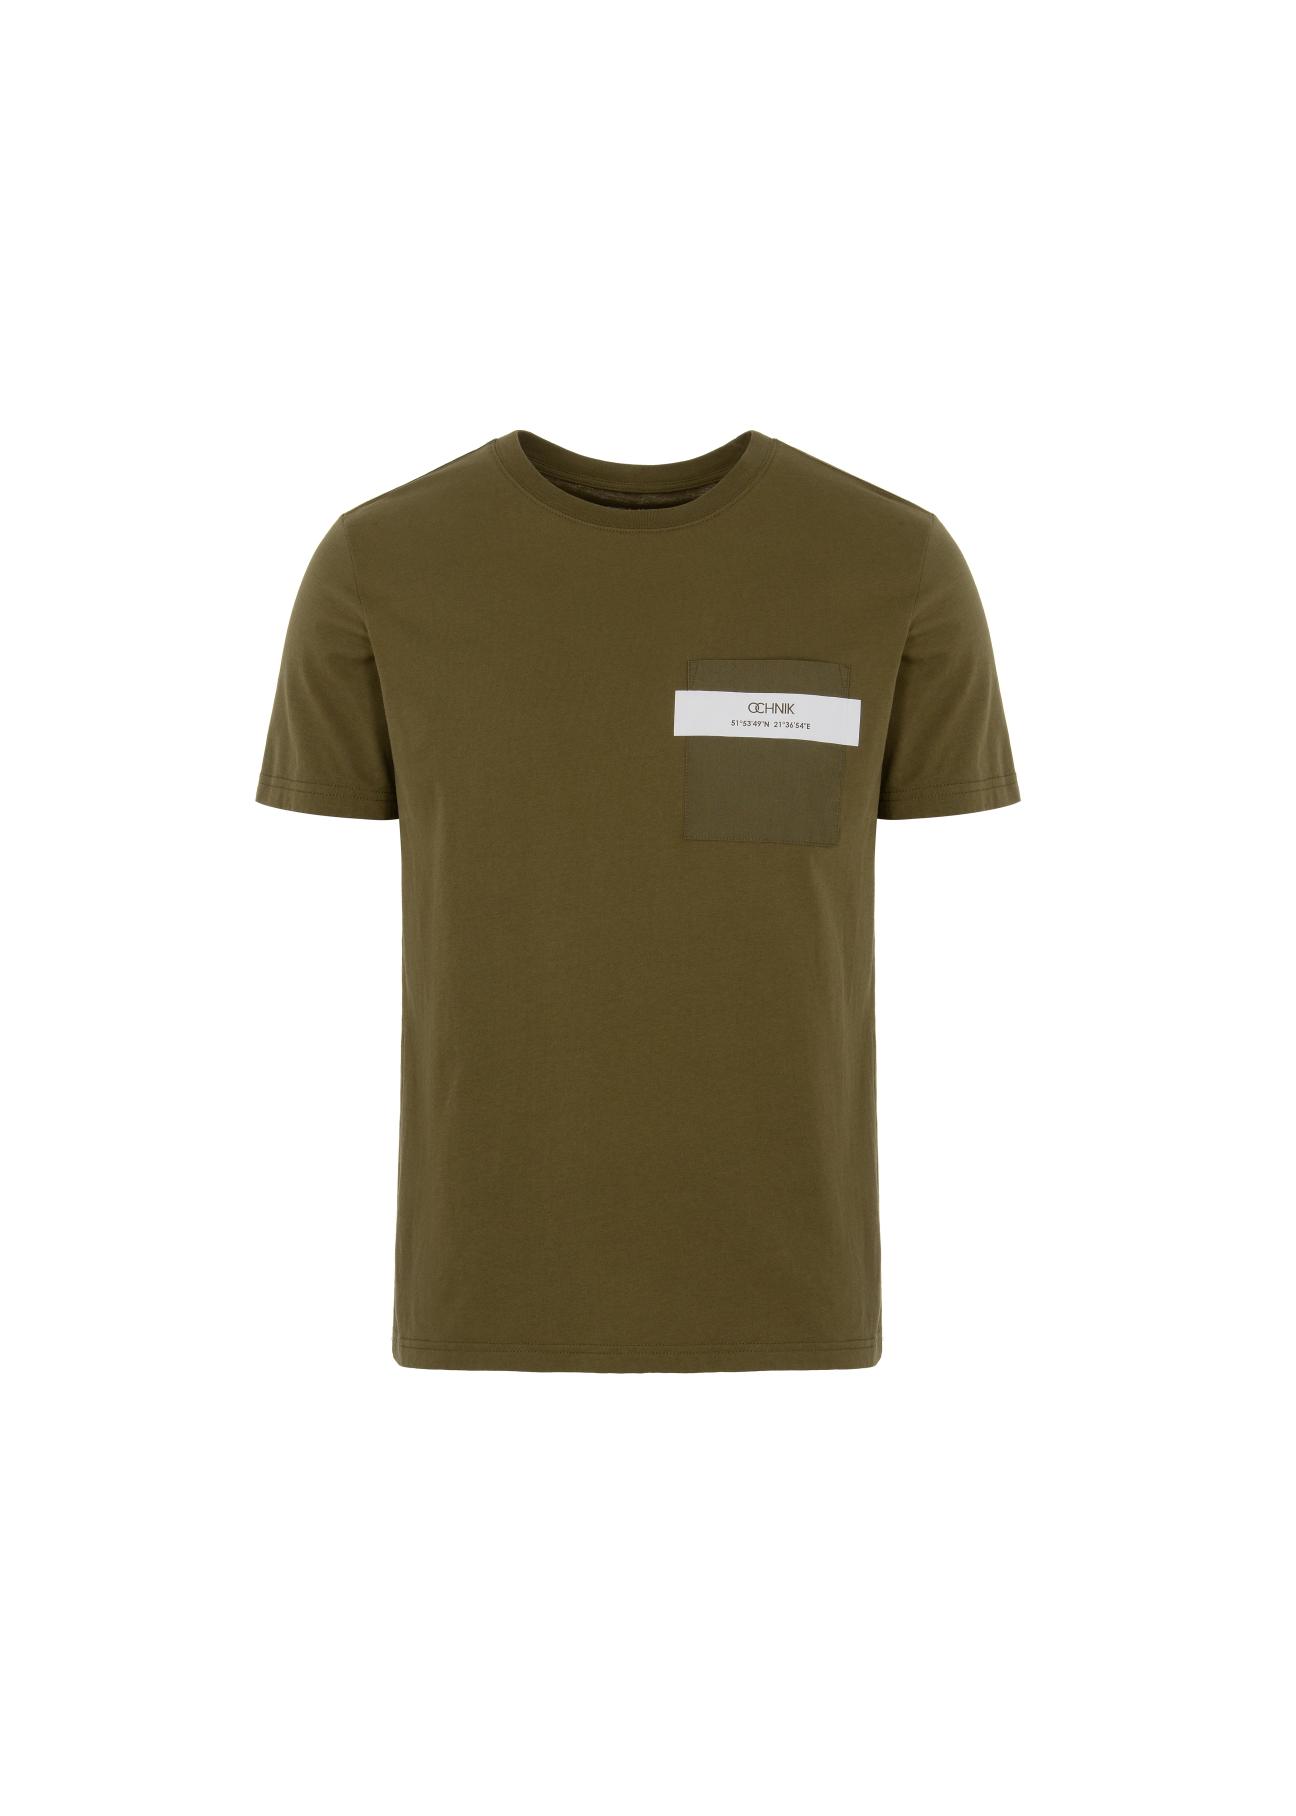 T-shirt męski TSHMT-0062-55(Z21)